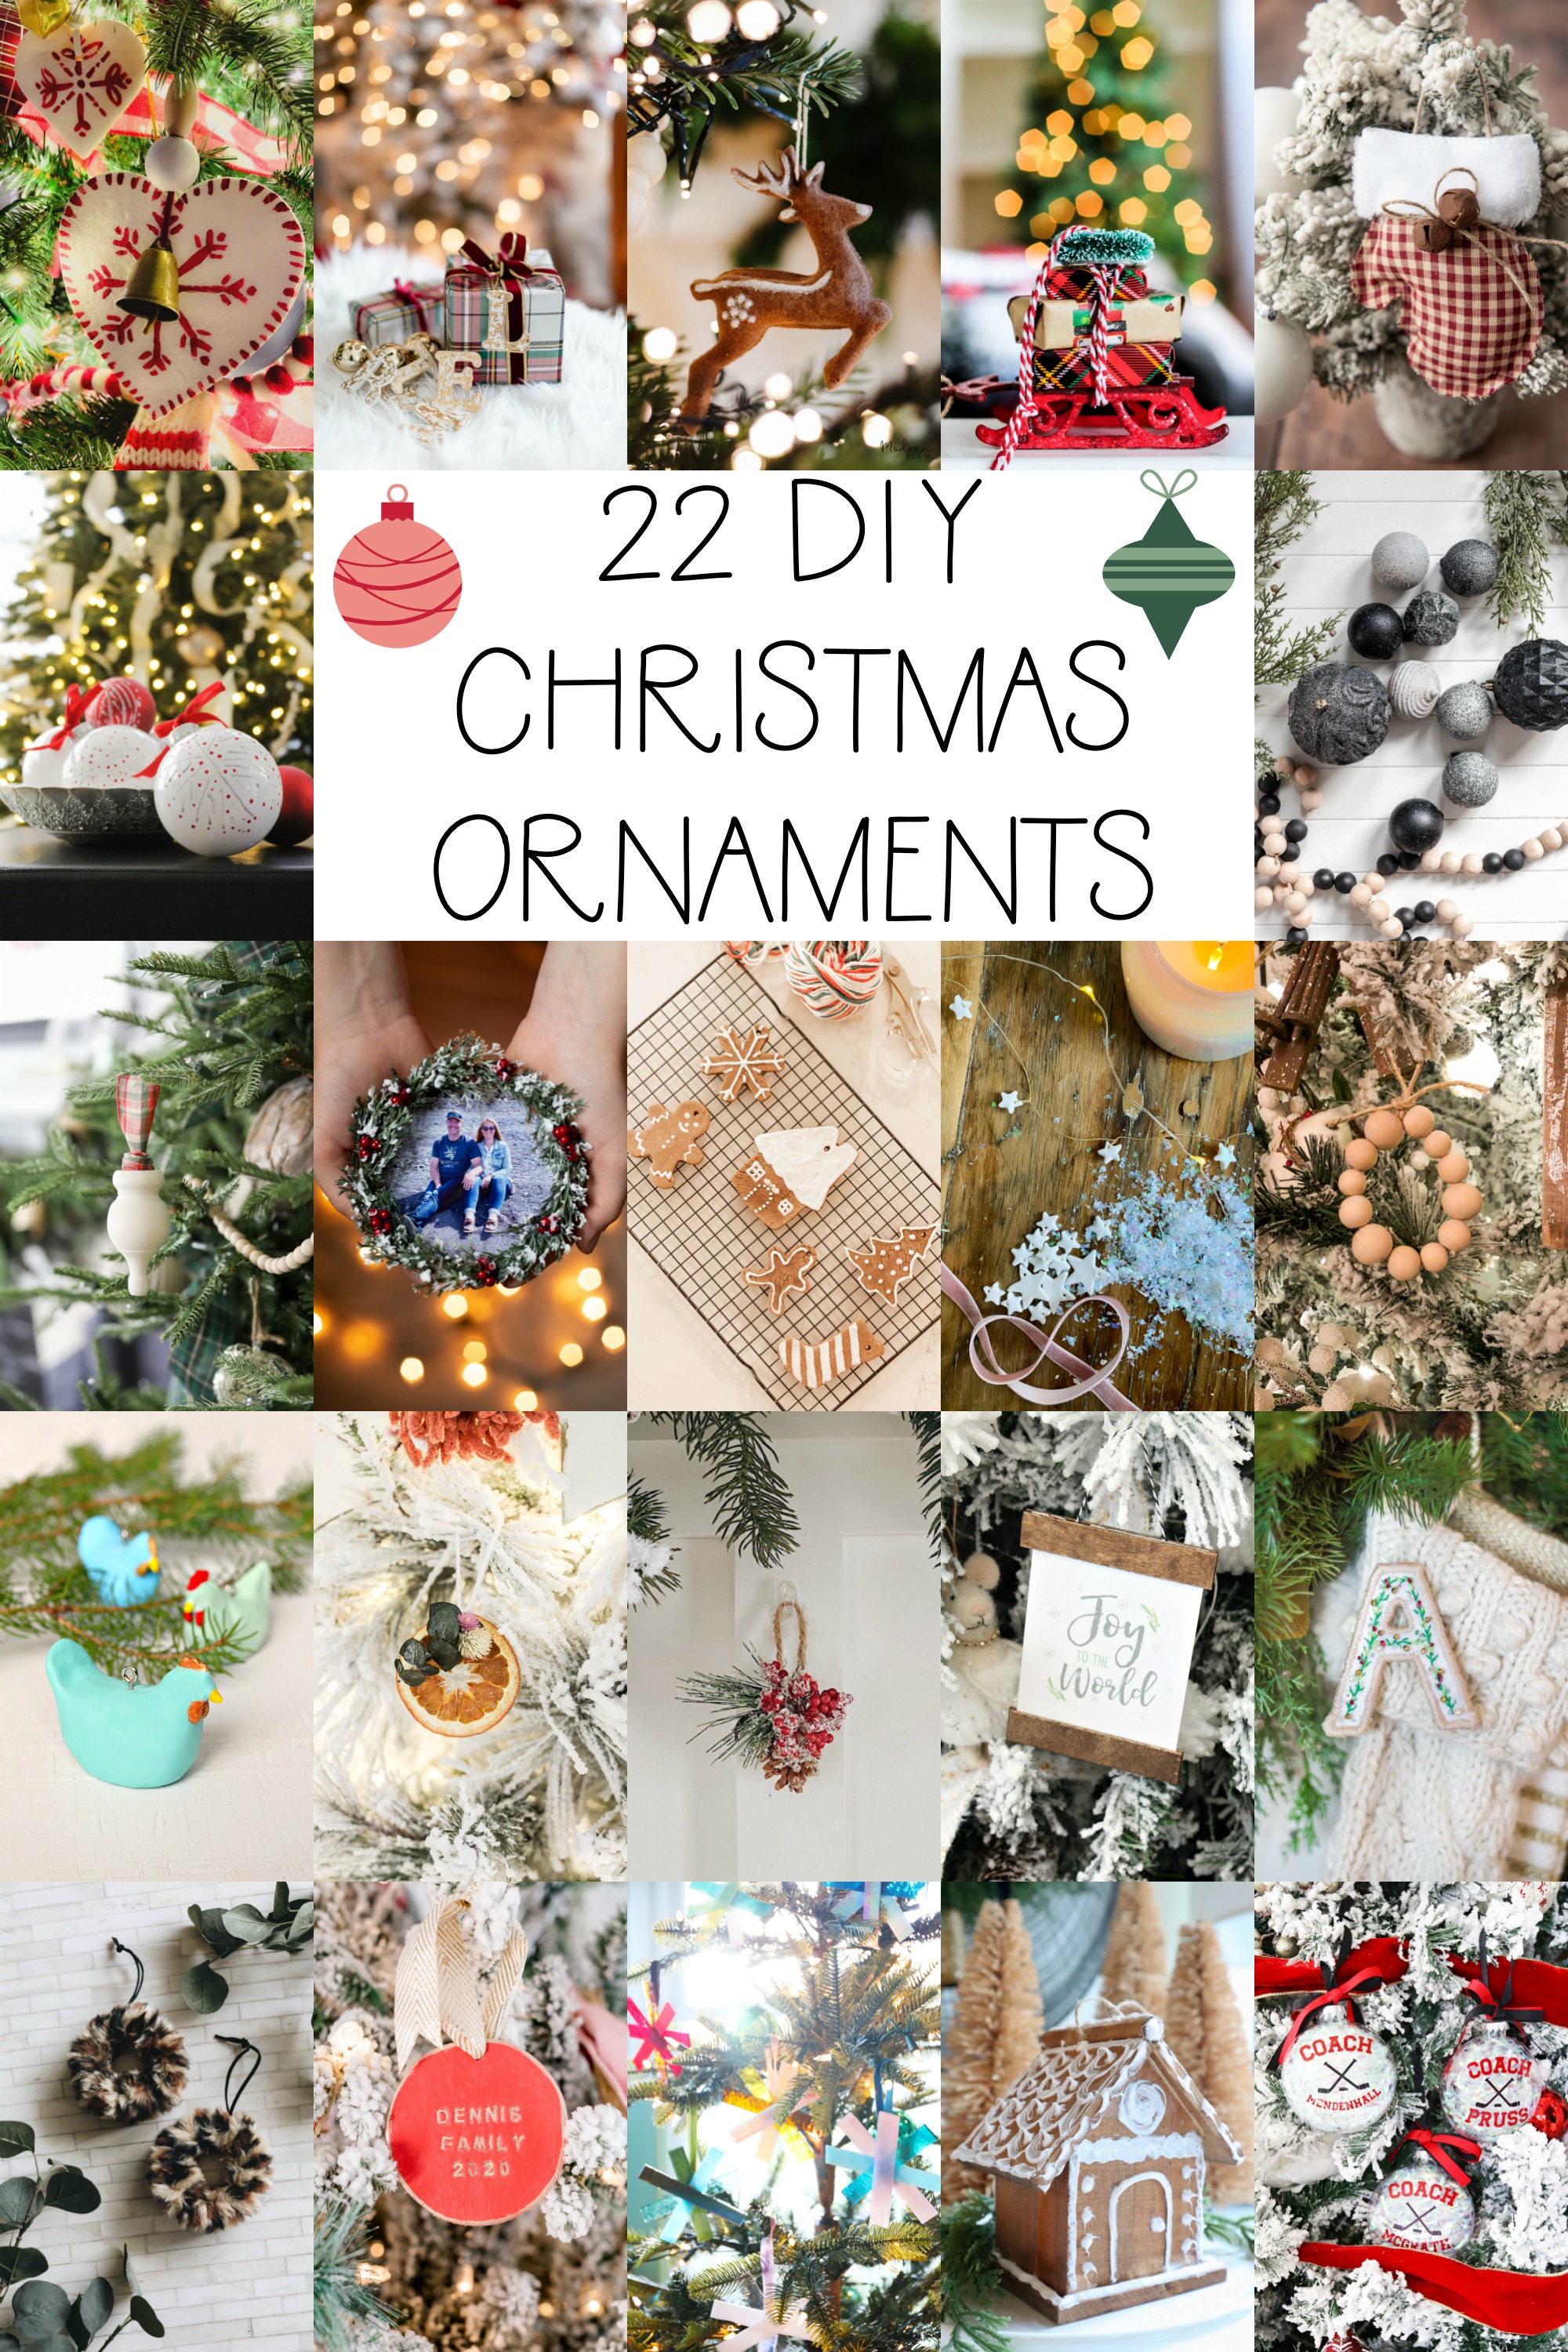 22 DIY Christmas Ornaments poster.